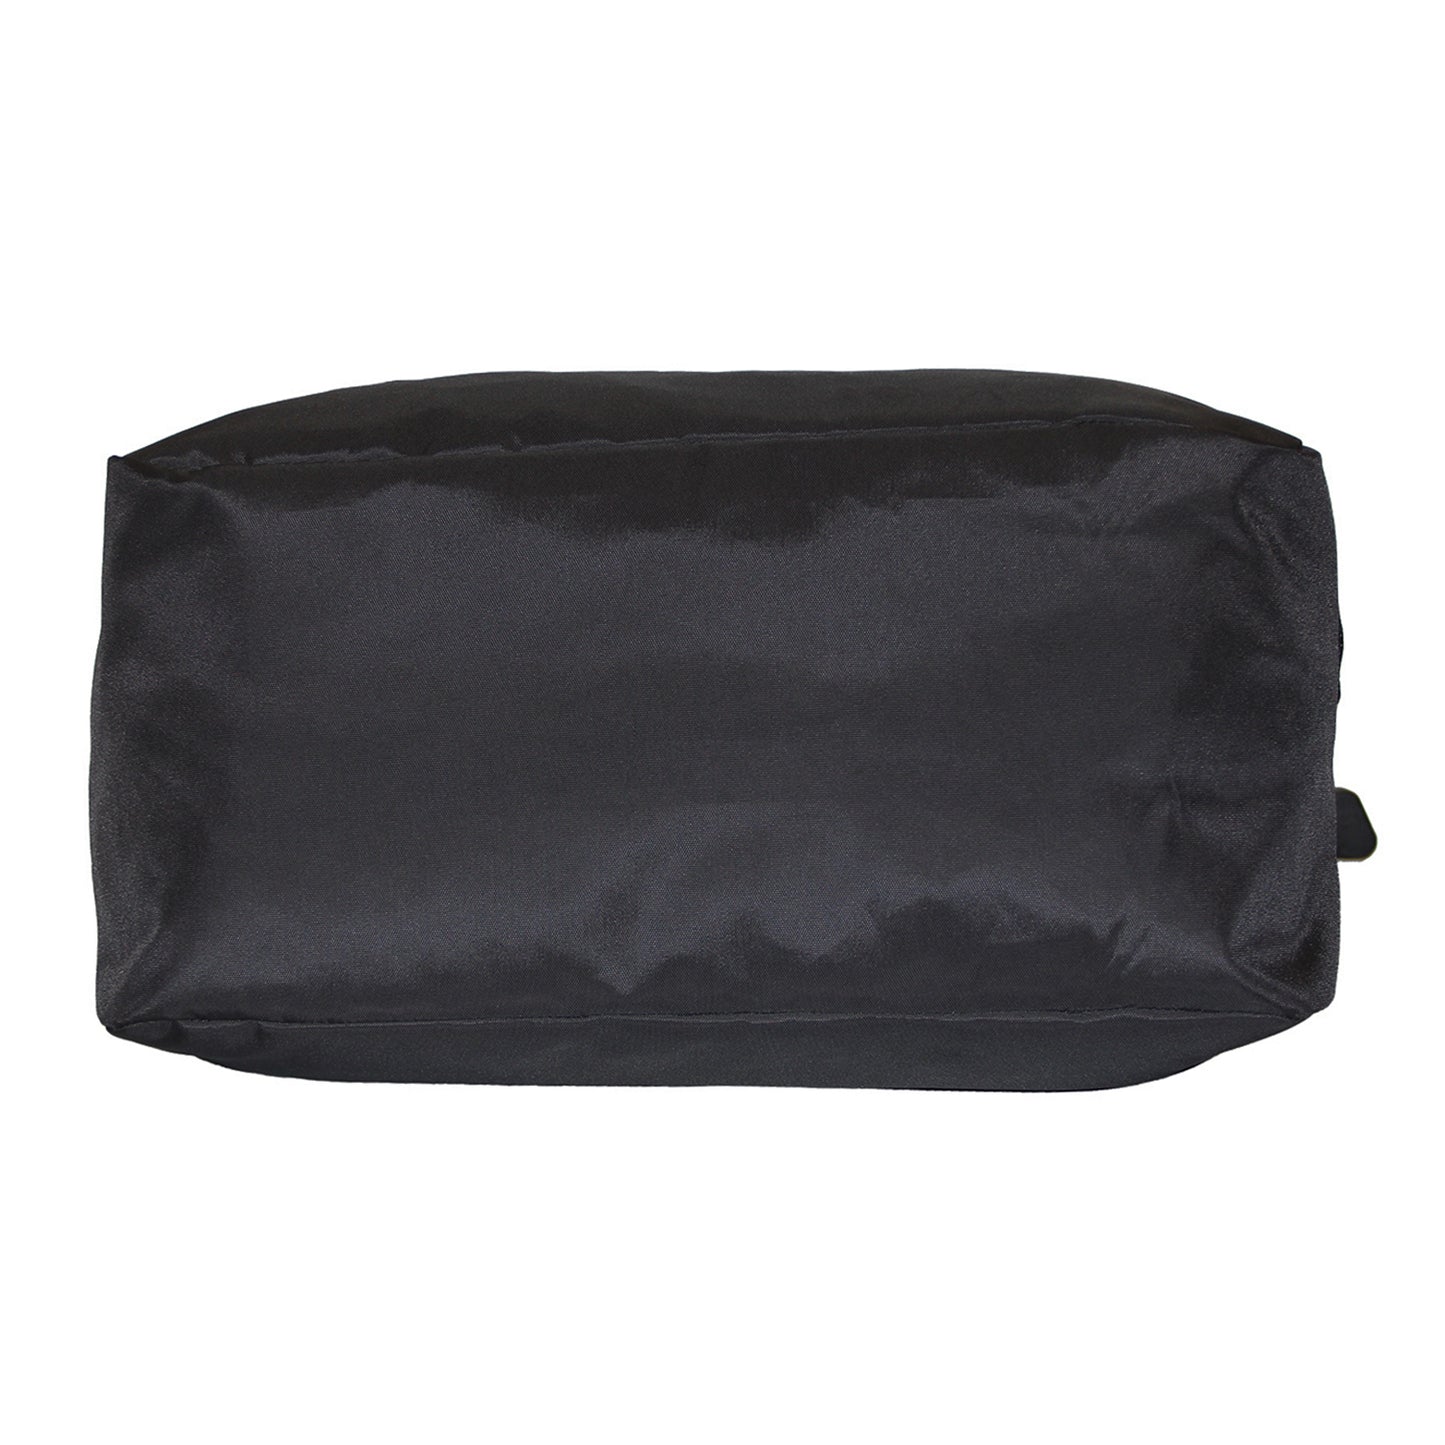 Black Polyester Basic Duffle bag